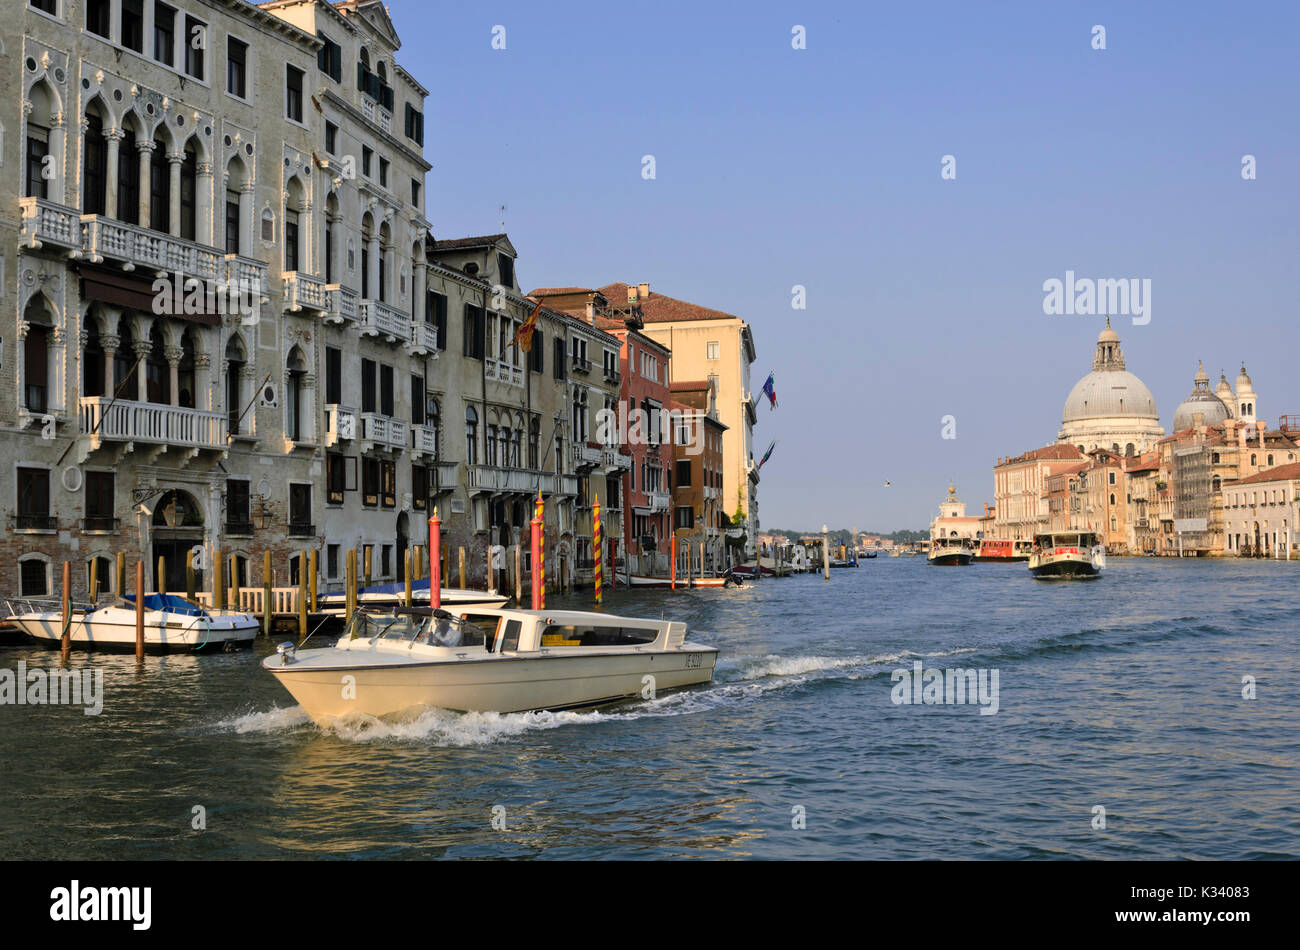 Palazzi and Santa Maria della Salute at the Grand Canal, Venice, Italy Stock Photo